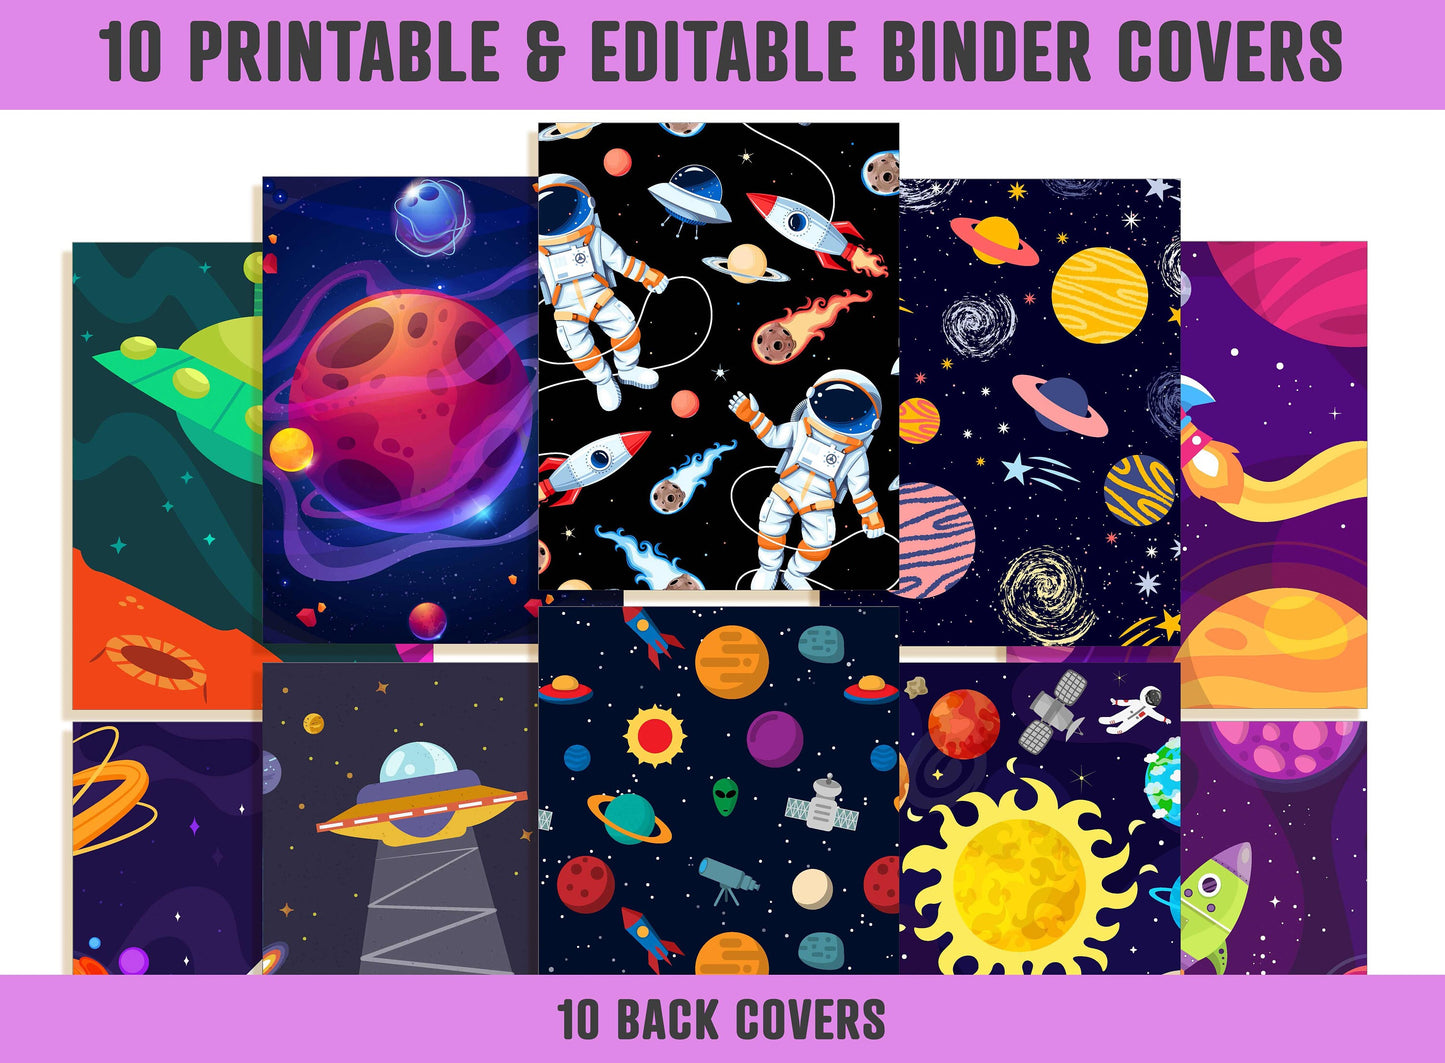 Binder Cover Boys, 10 Printable & Editable Binder Covers+Spines Binder Cover Sheet Binder Cover Inserts Planner Template, Alternative Layout